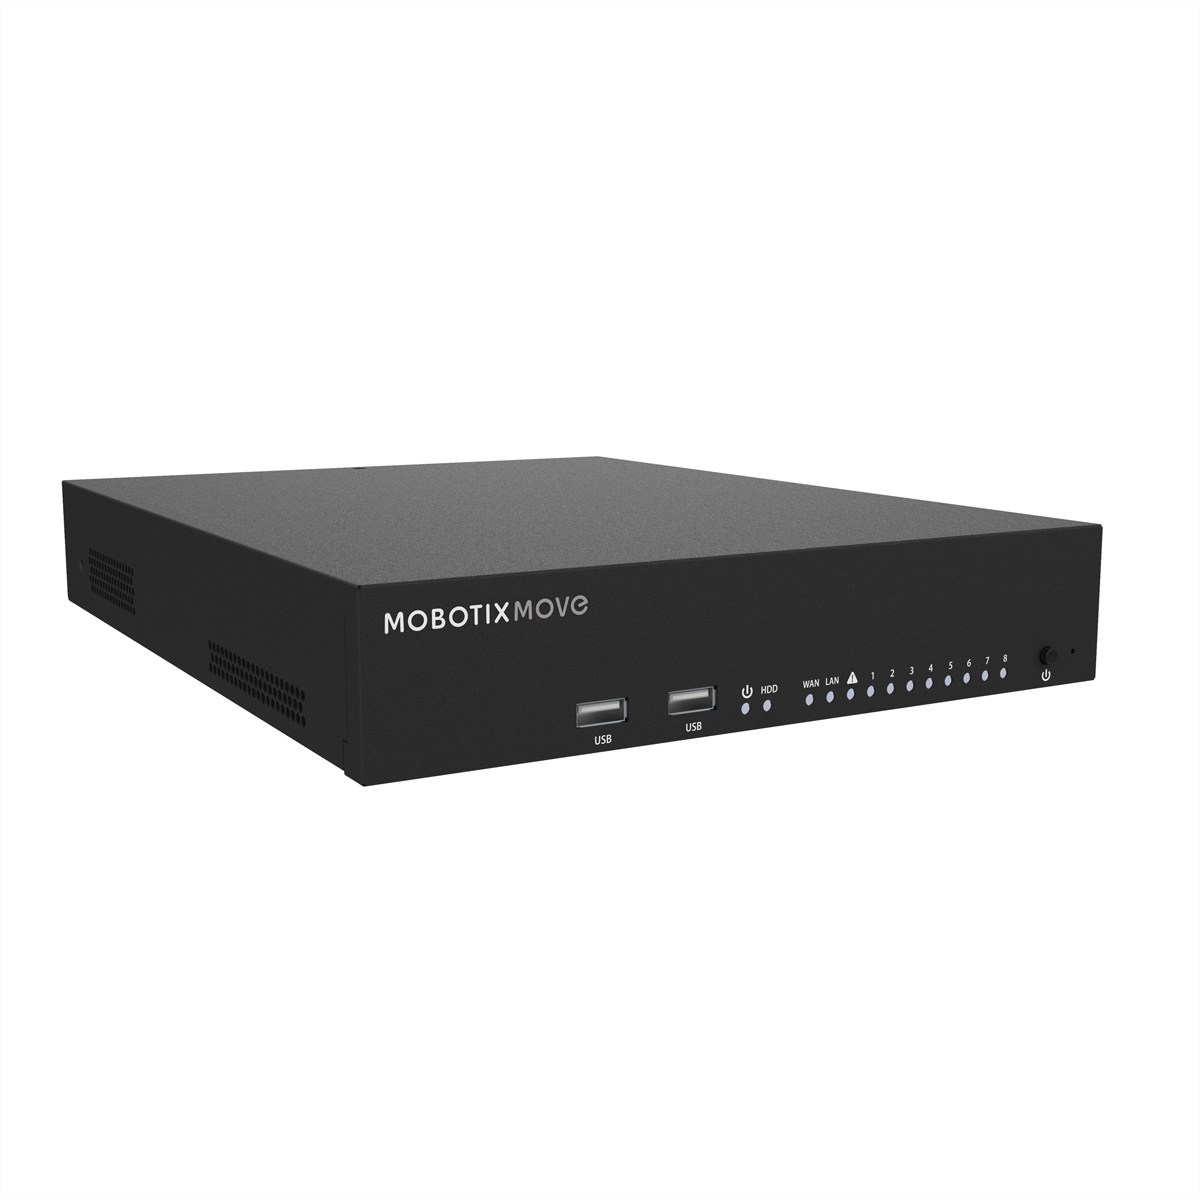 MOBOTIX MOVE NVR Netzwerk-Videorekorder 8 Kan?le